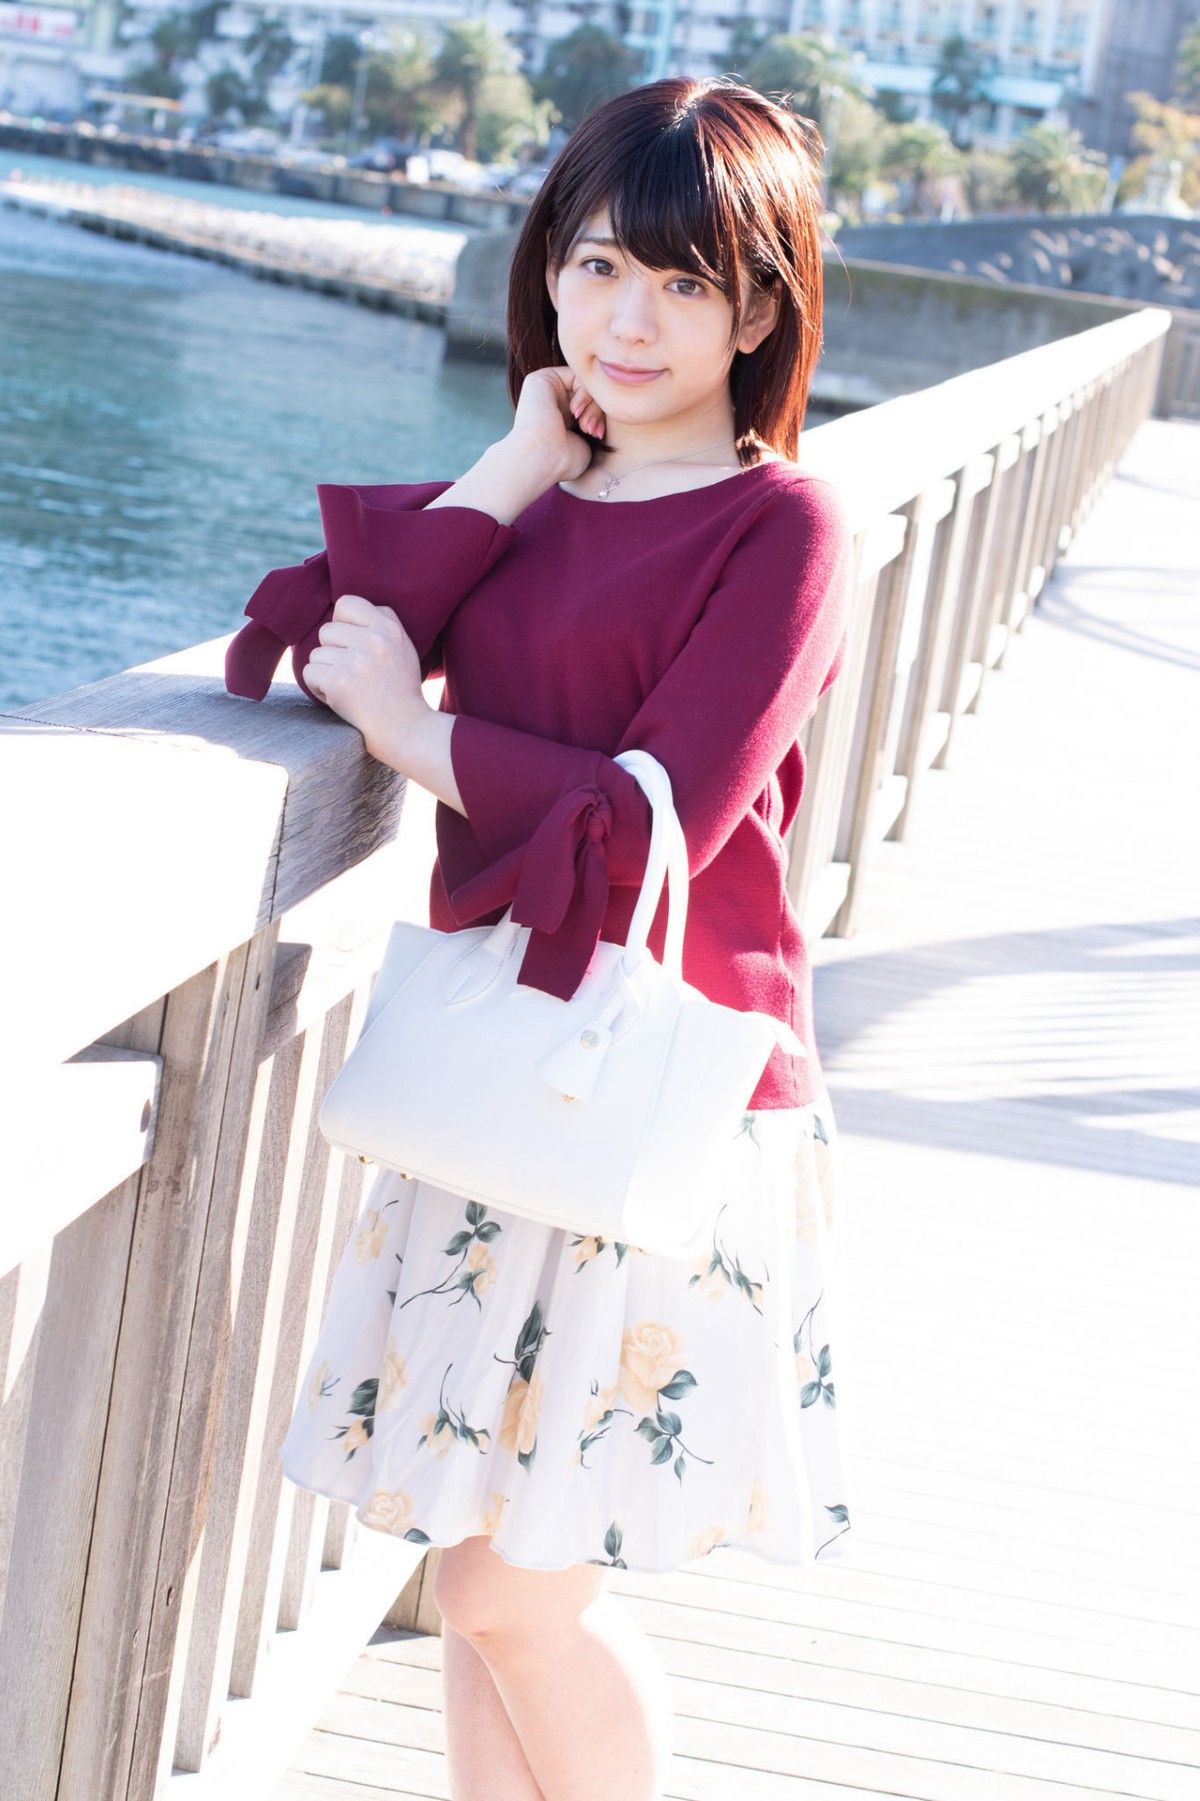 Photobook 2019 07 19 Asuna Kawai Maria Aine Nozomi Arimura 2 Days 1 Night Hot Spring Date 0050 8854595667.jpg